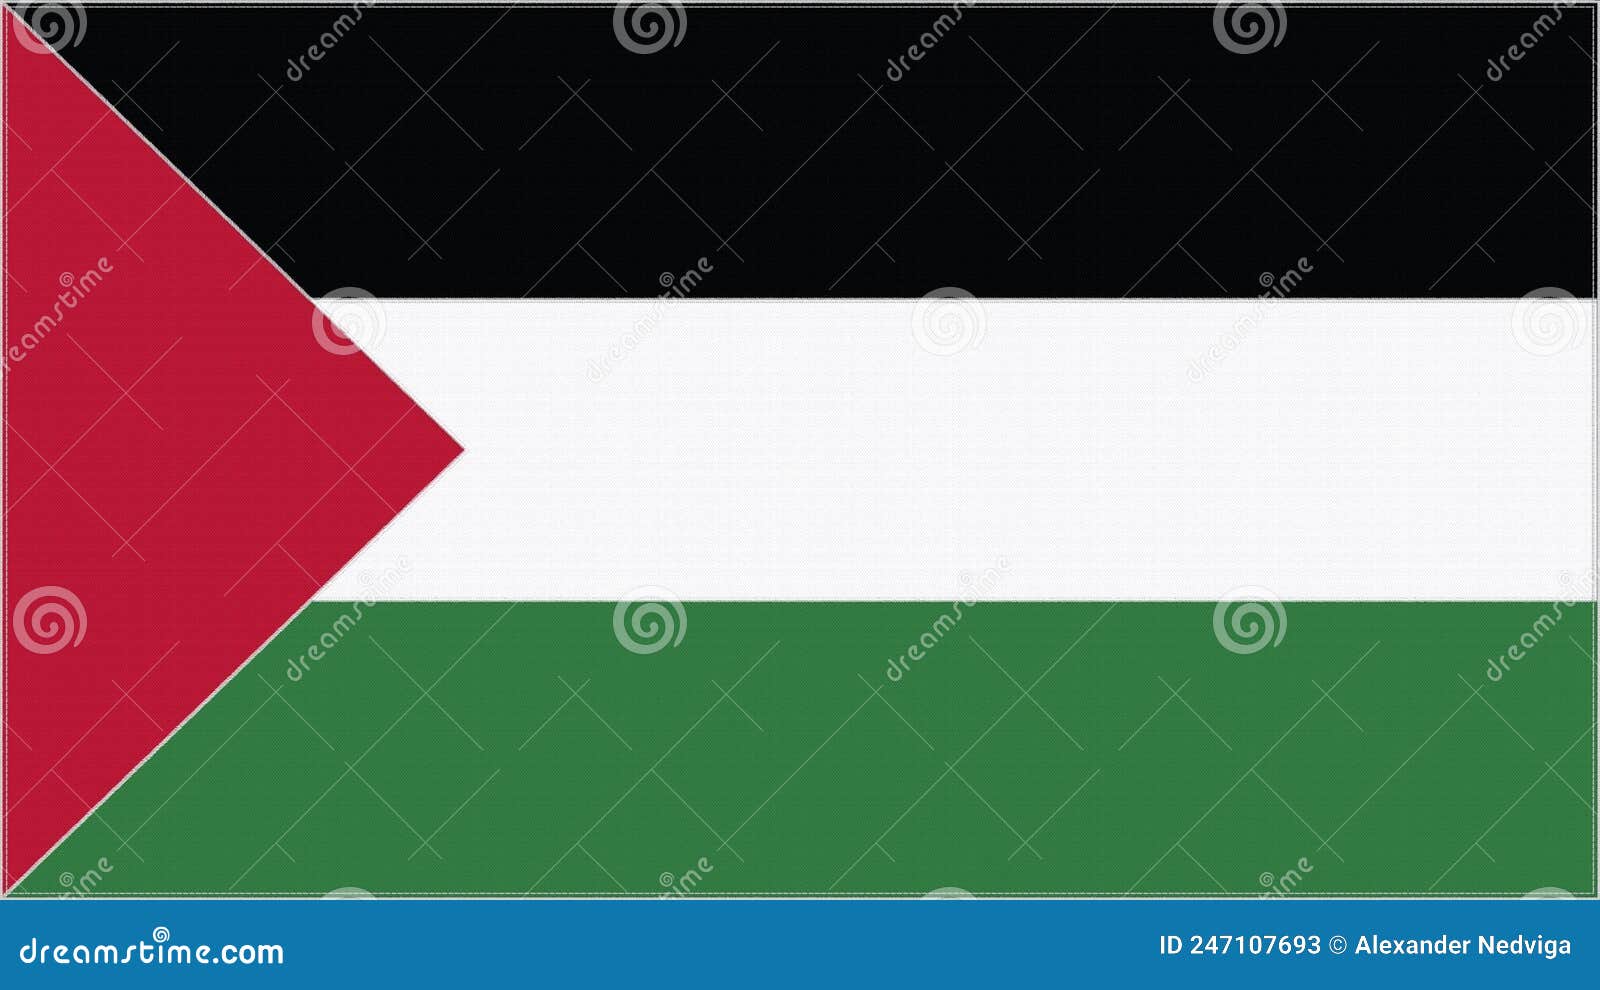 Palestine flag stickers set. Simple symbols badges. Isolated